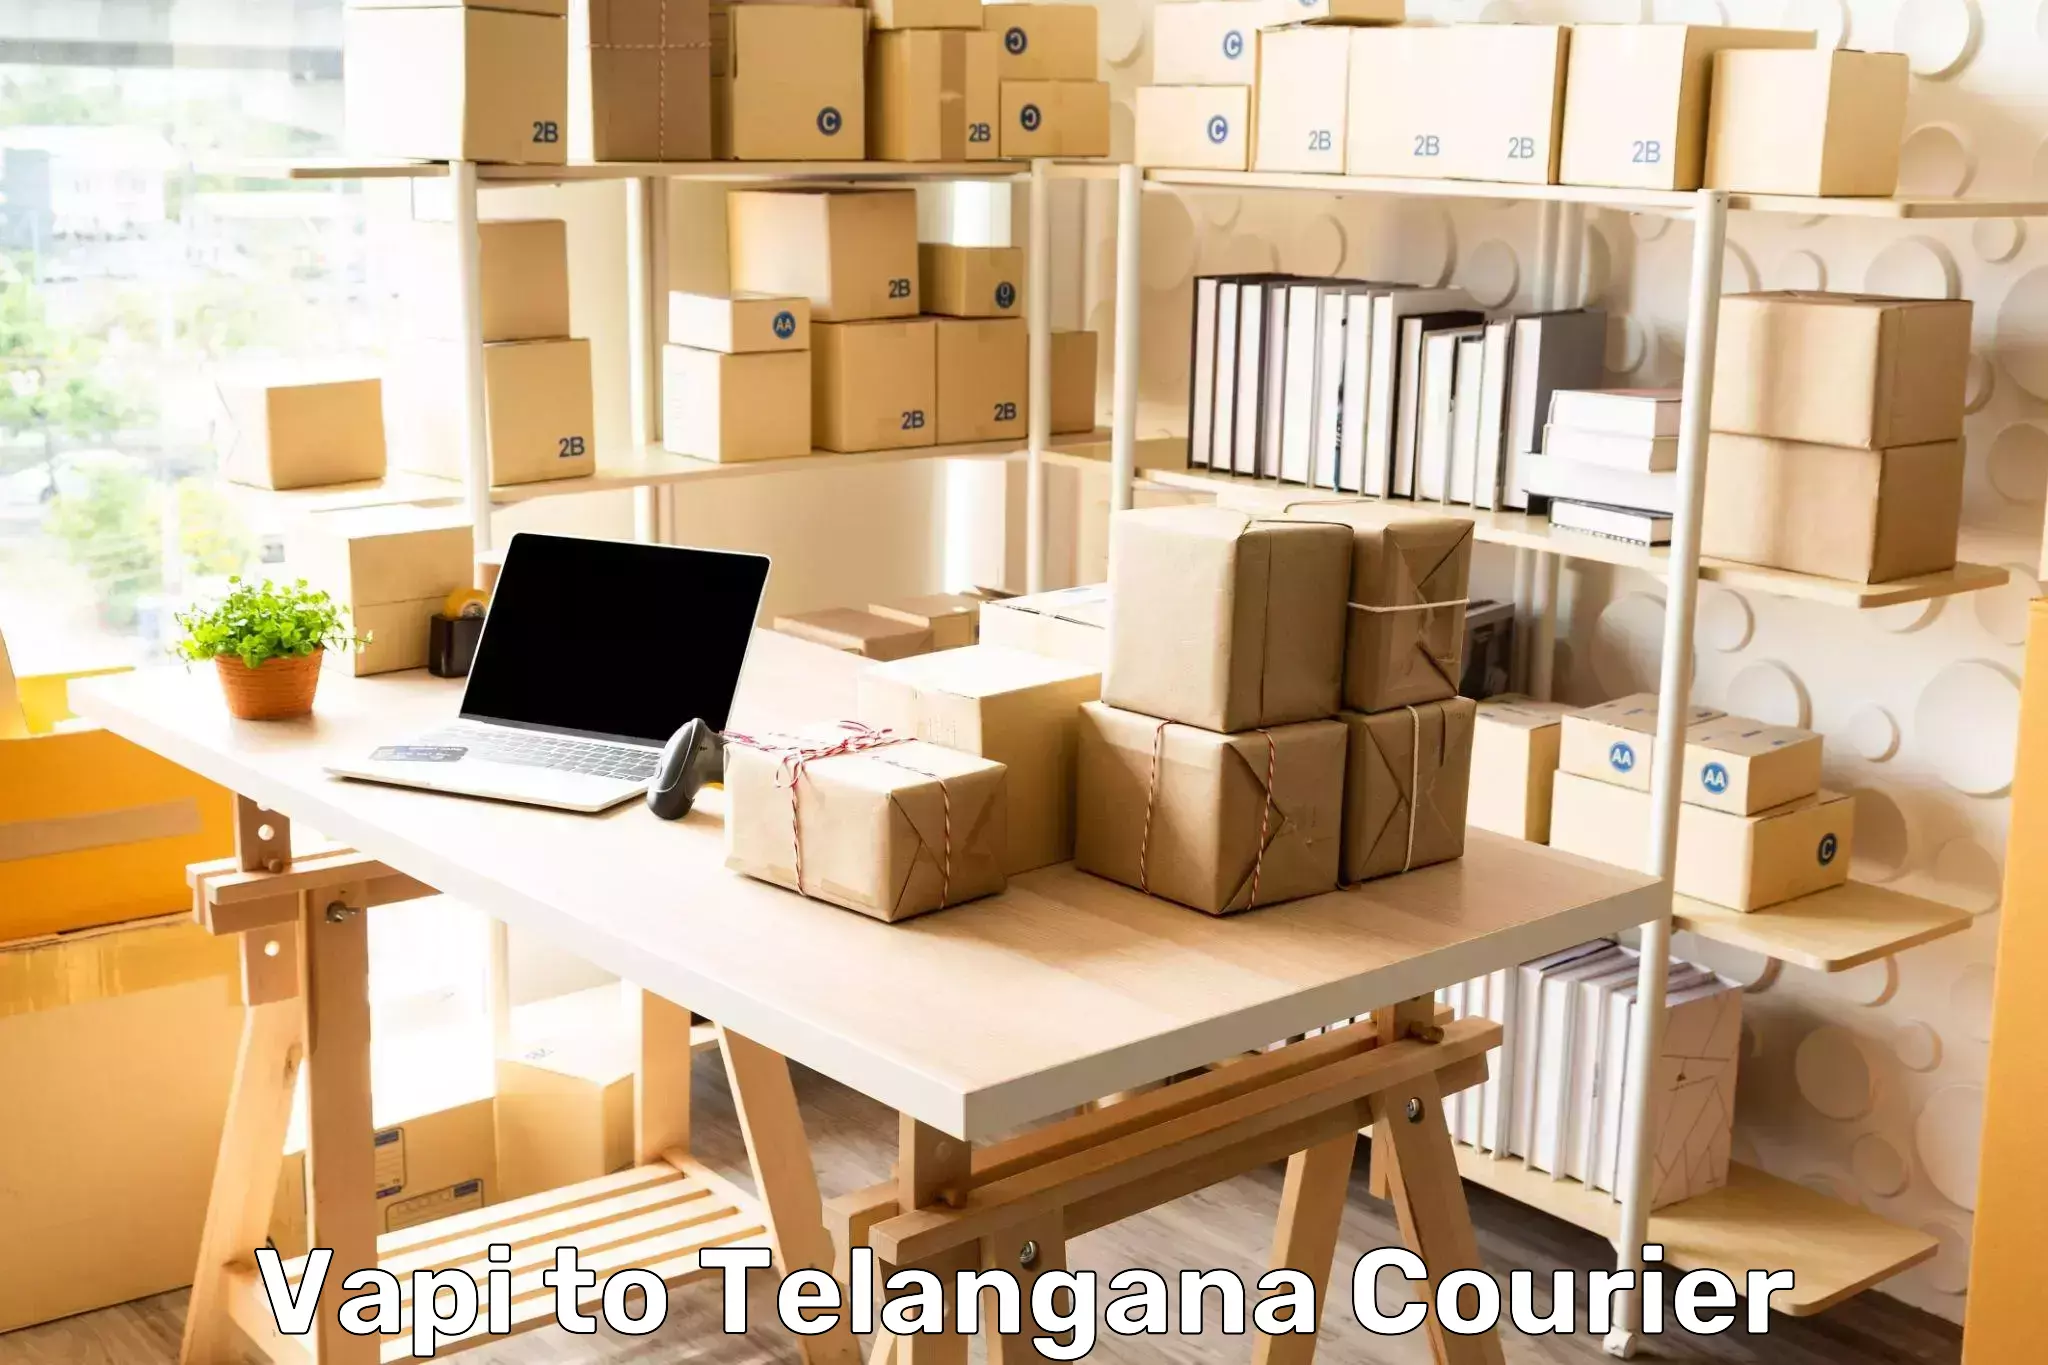 High-capacity parcel service Vapi to Tadvai